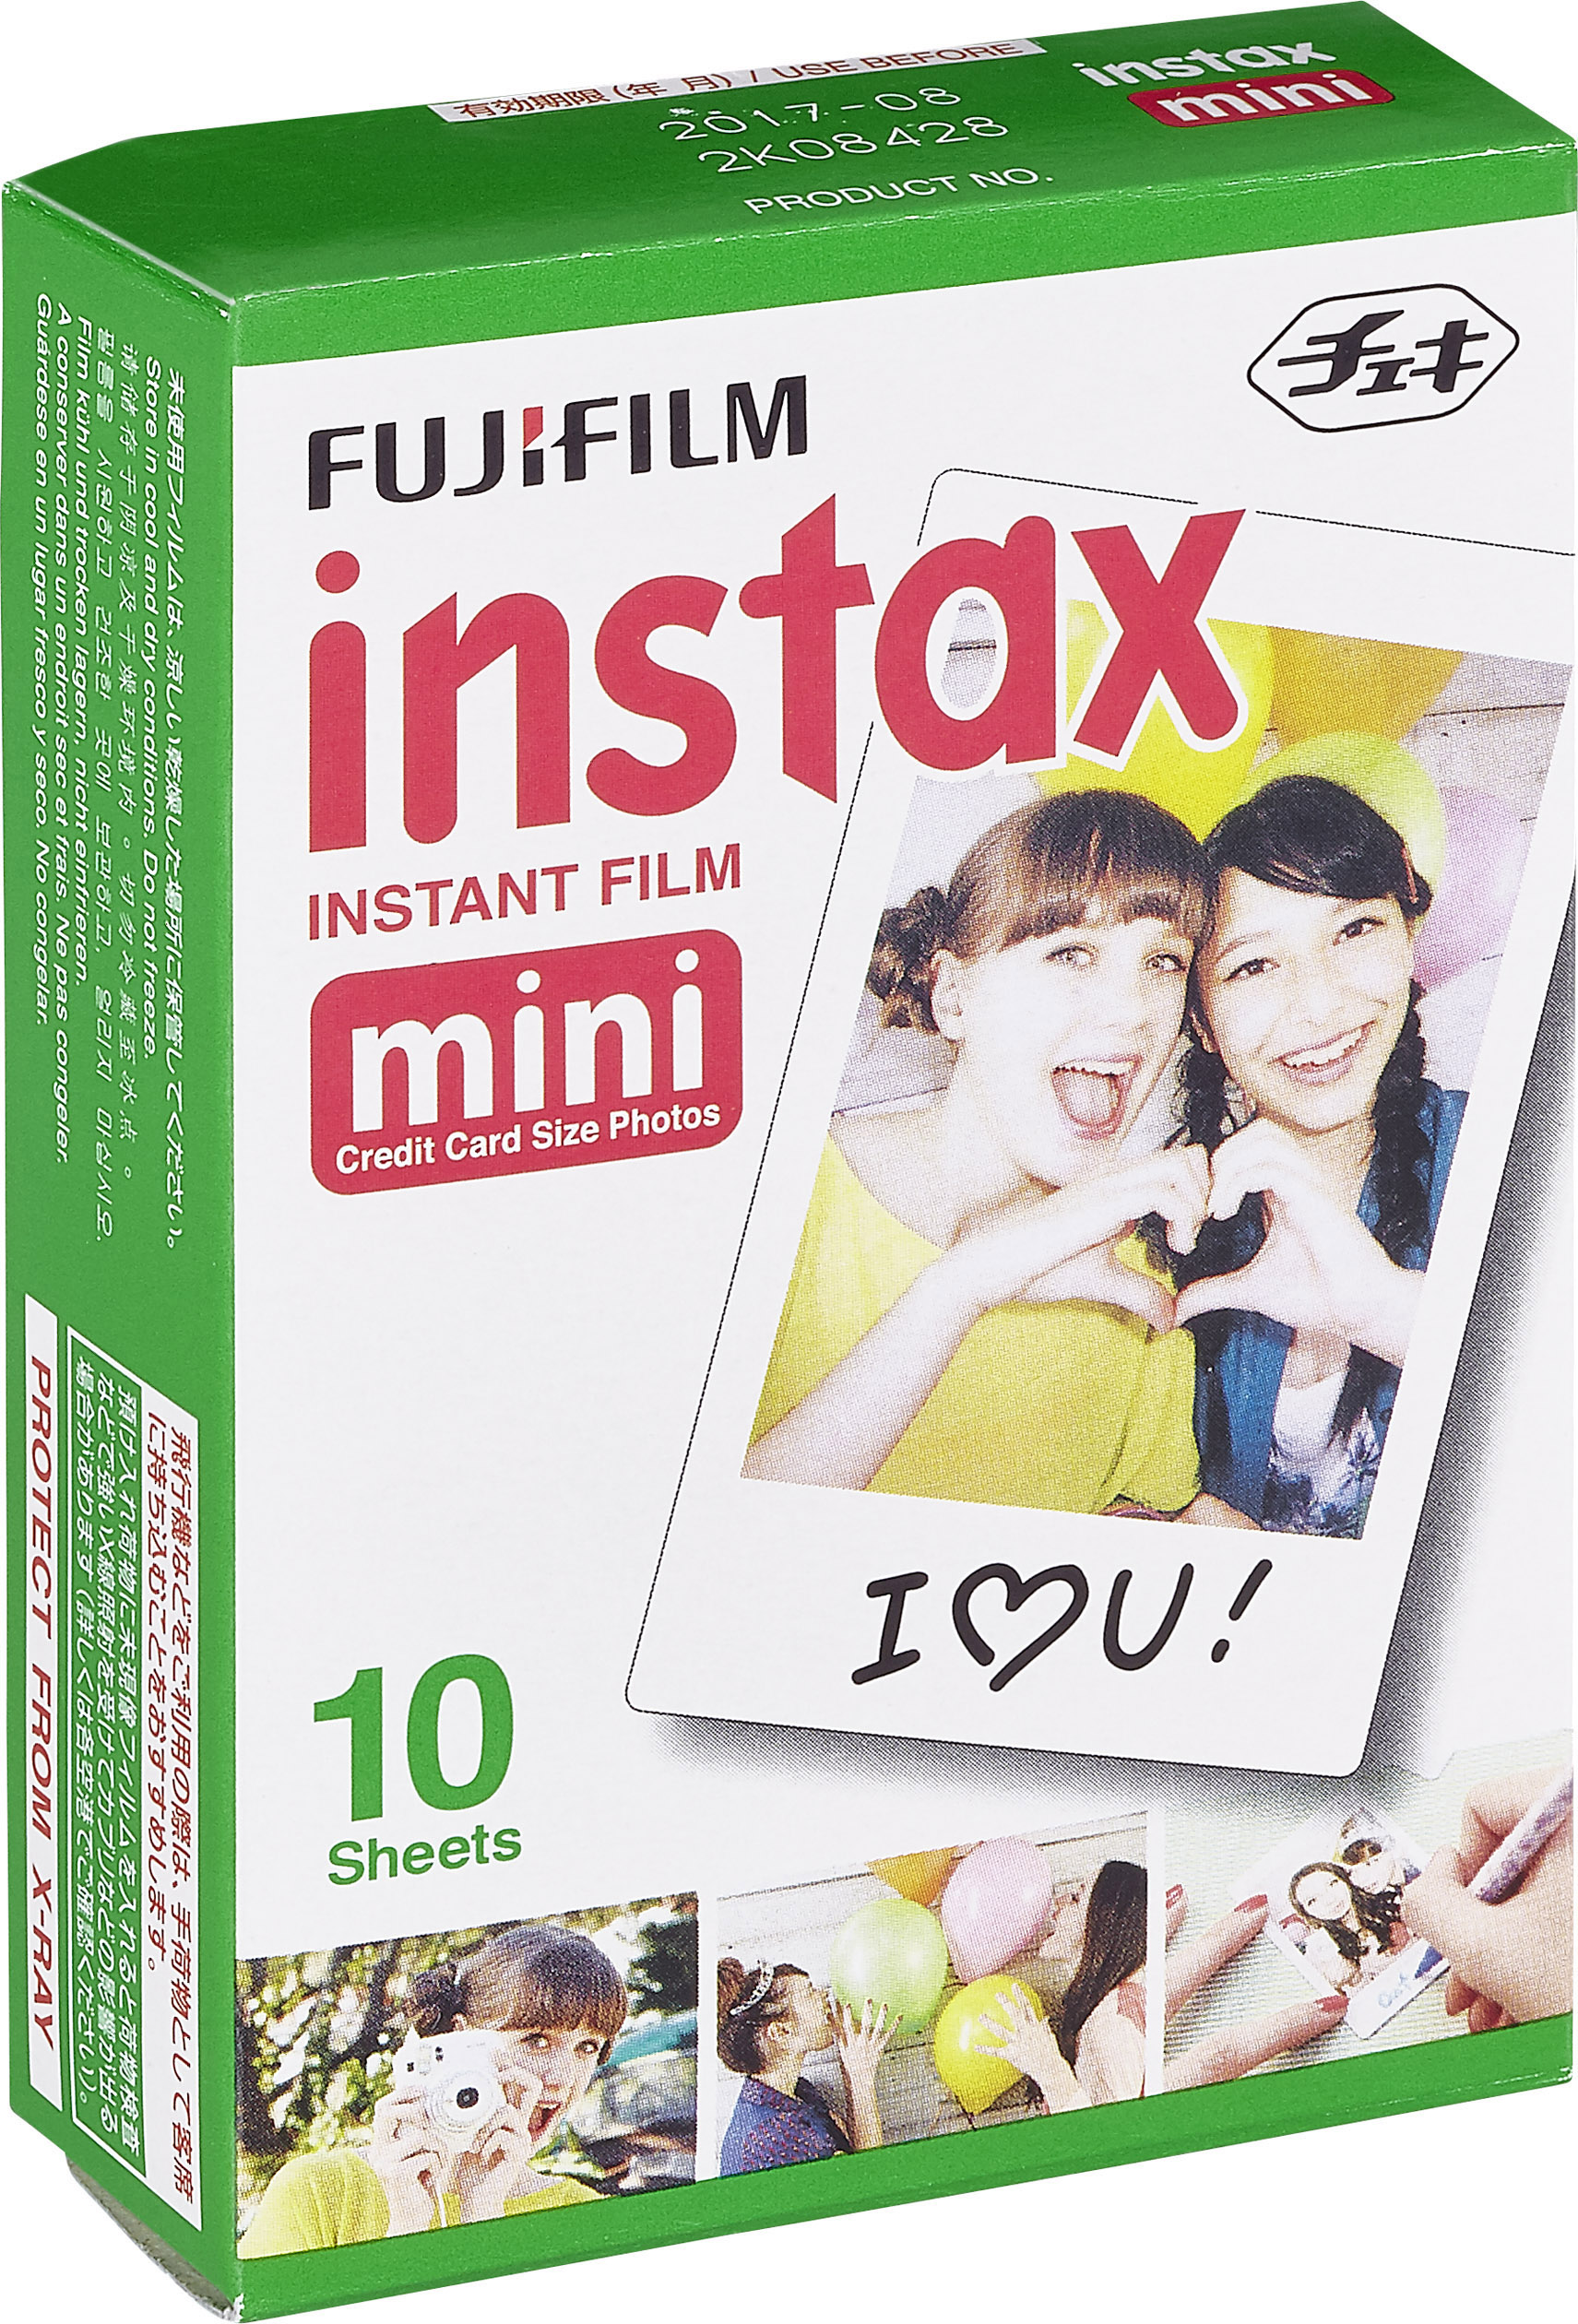 Film instantané Fujifilm INSTAX MINI 10er Pack